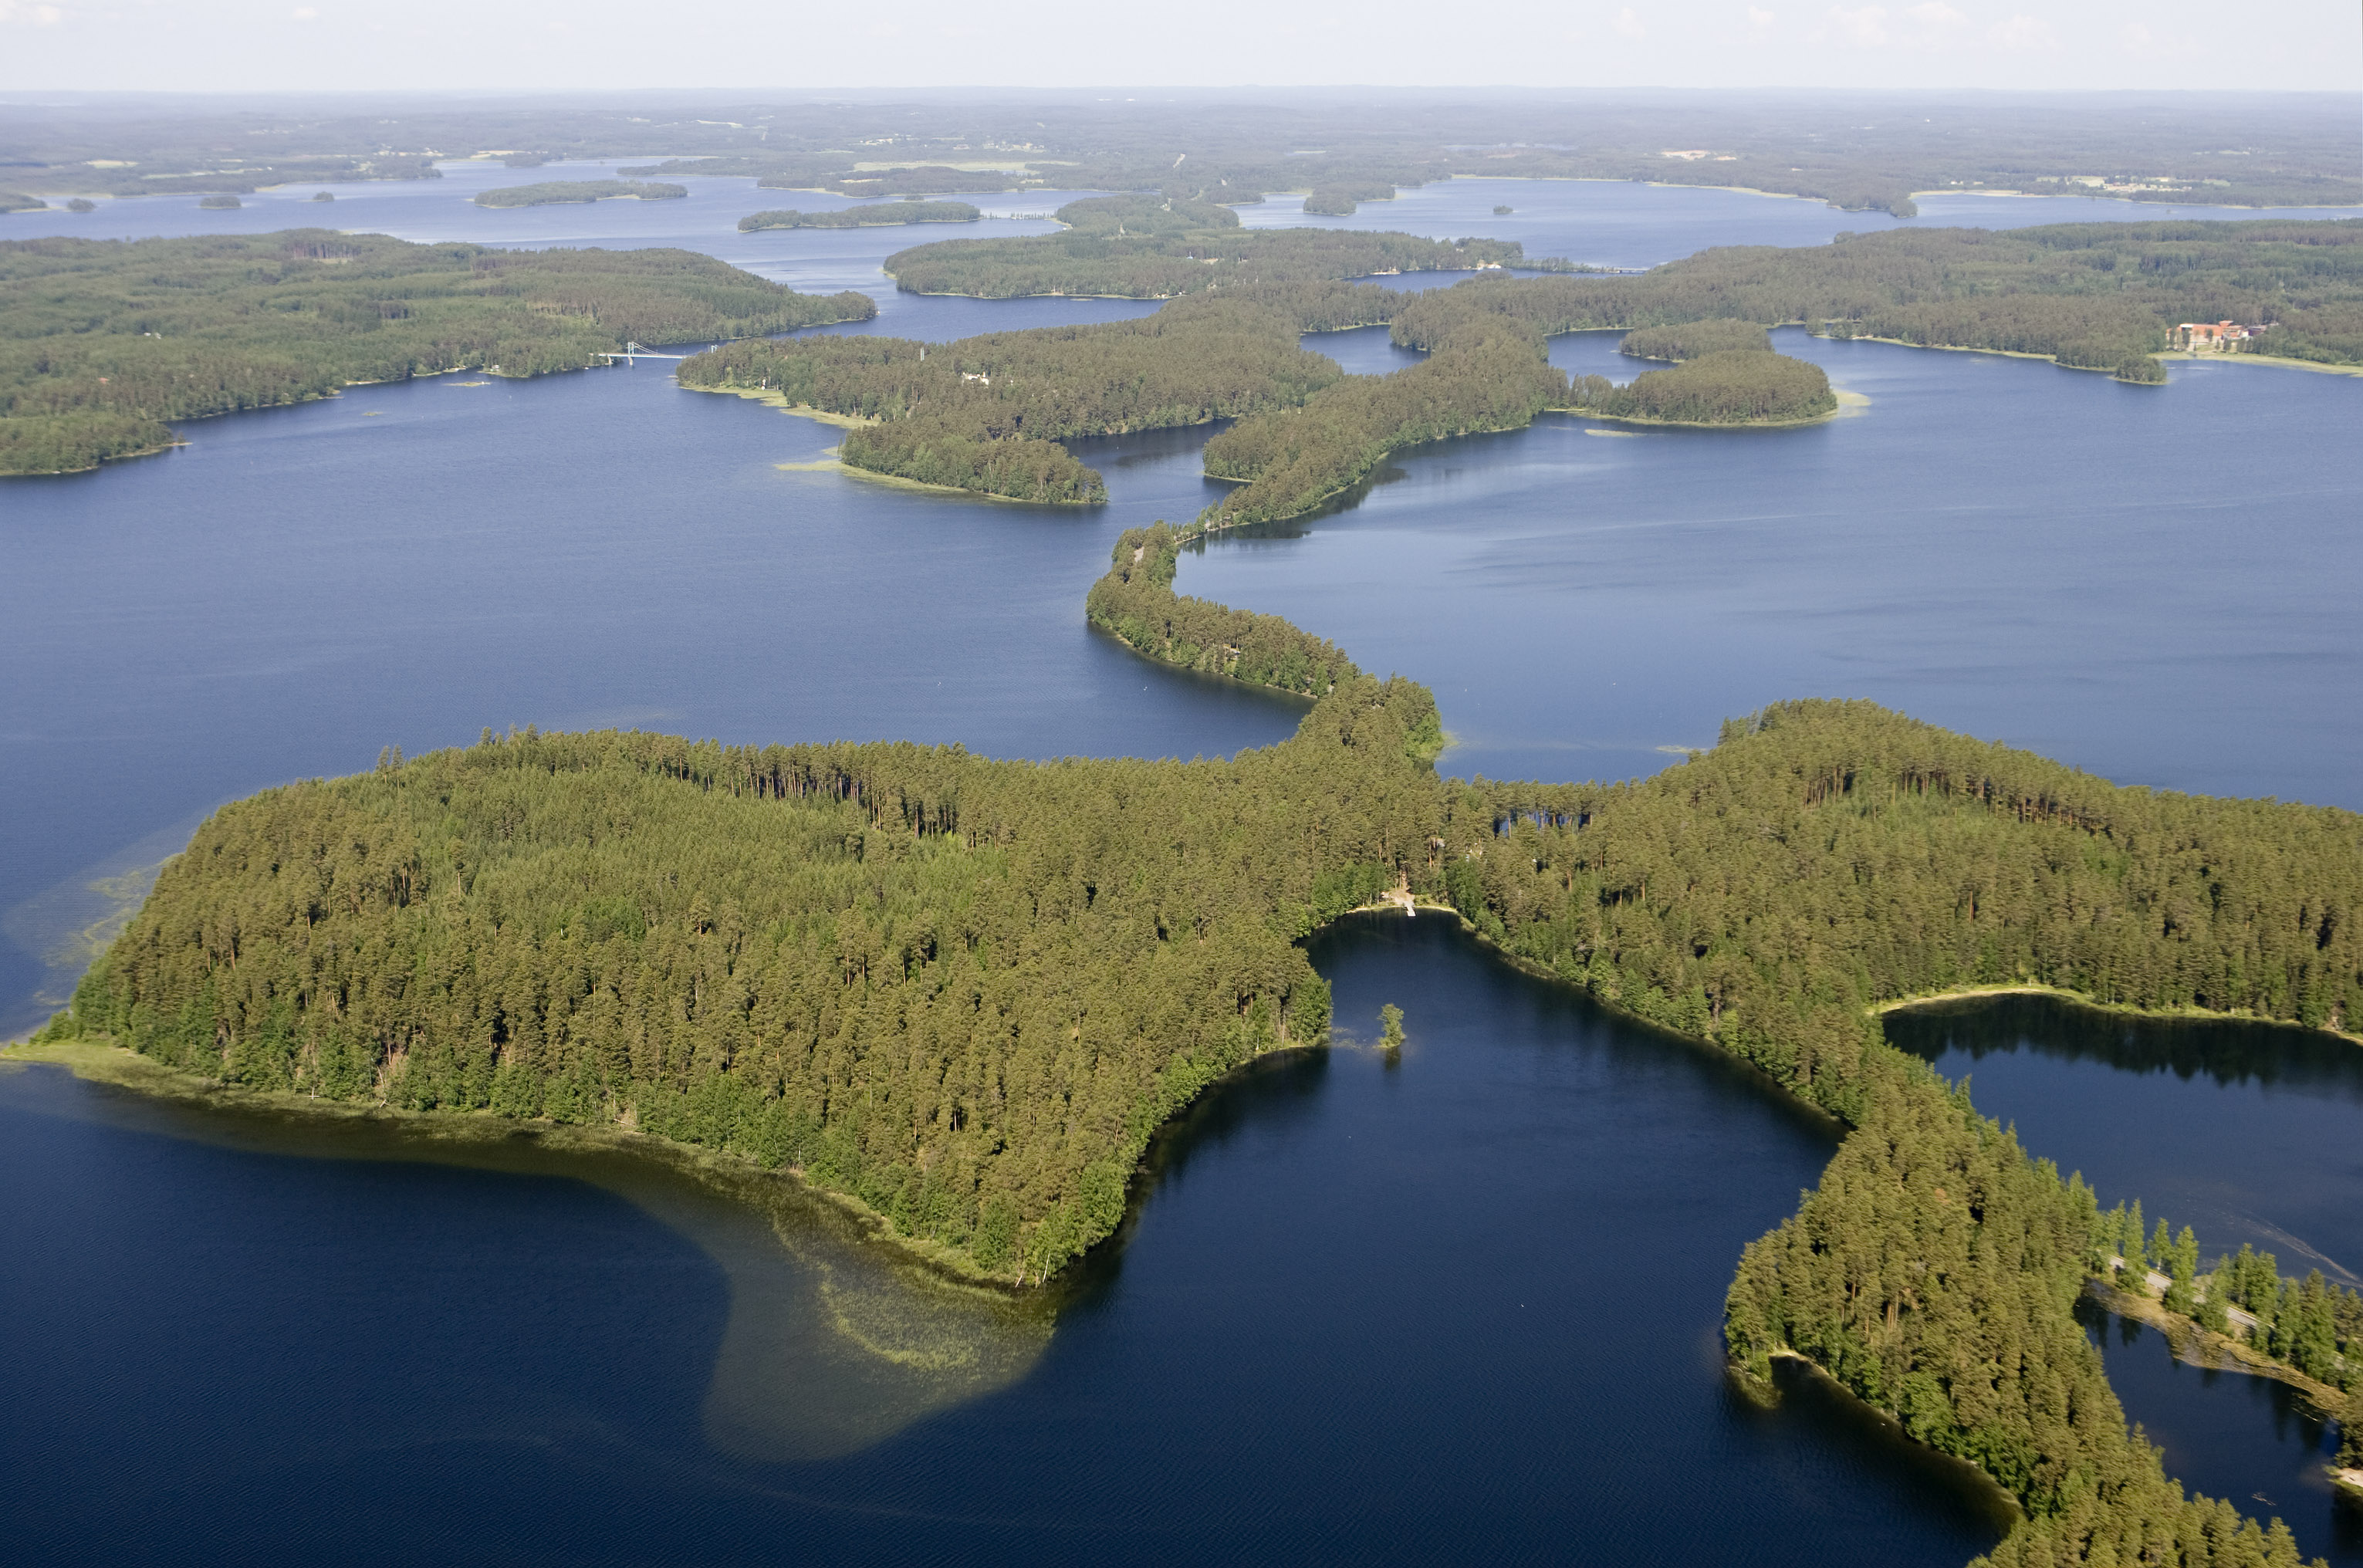 Республика тысячи озер. Озеро Сайма Финляндия. Гряда Пункахарью Финляндия. Архипелаг Кваркен Финляндия. Озеро Сайма Финляндия фото.